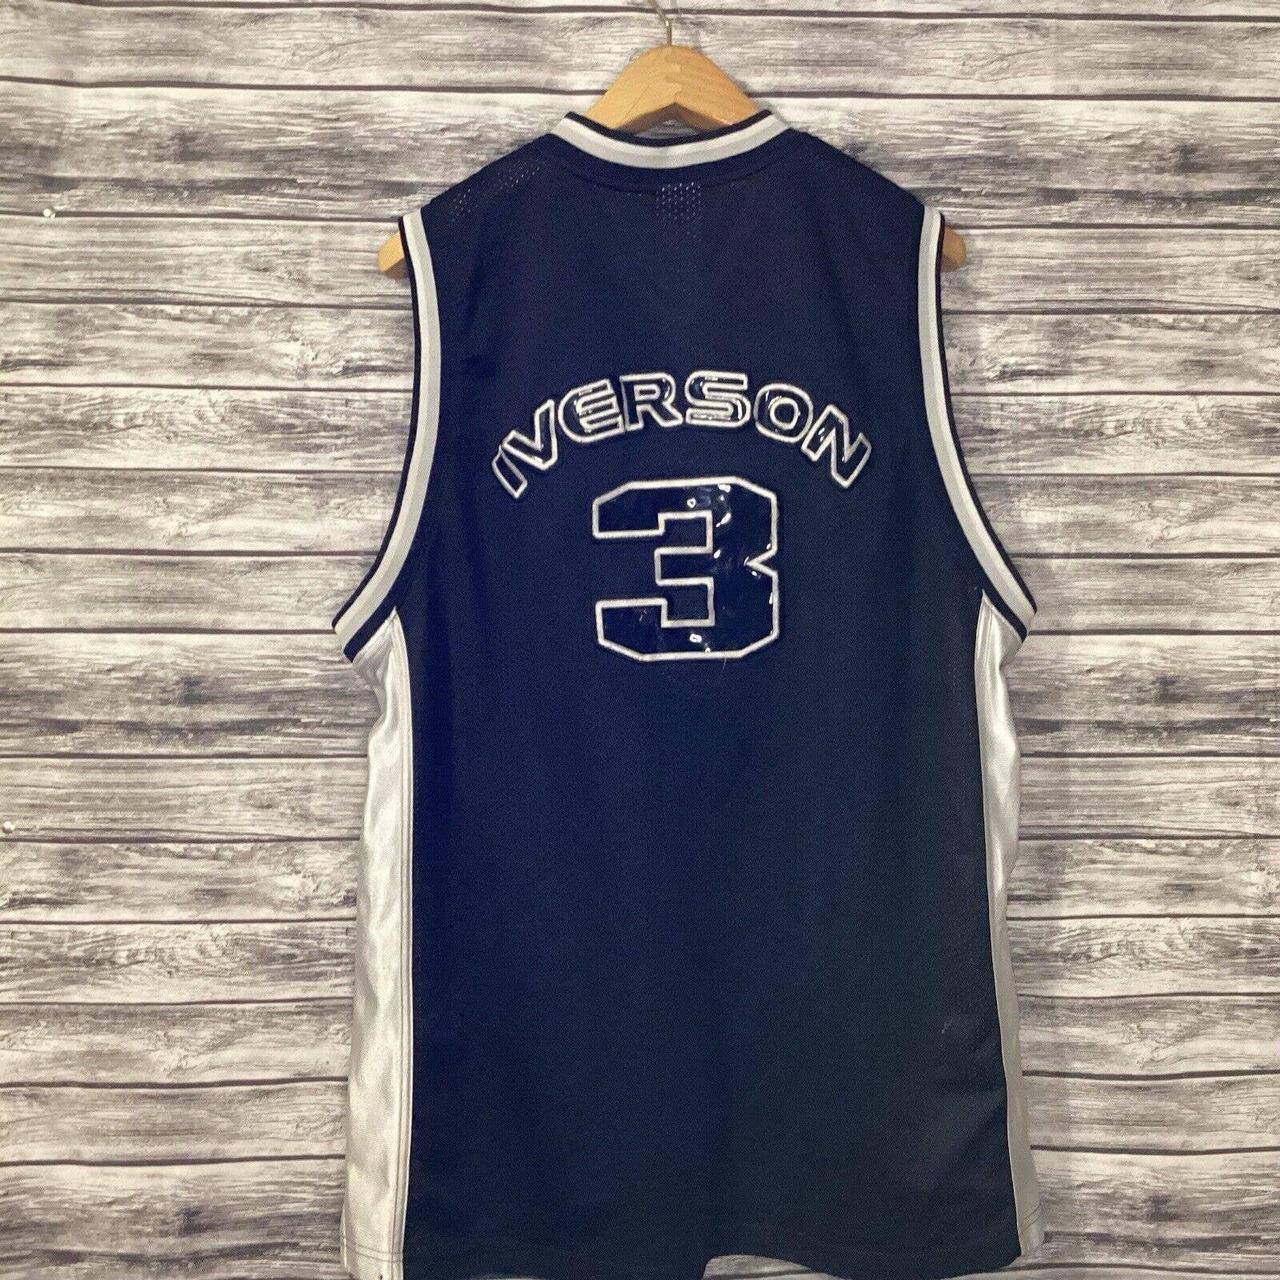 ALLEN IVERSON I3 Reebok Basketball Limited Edition Jersey